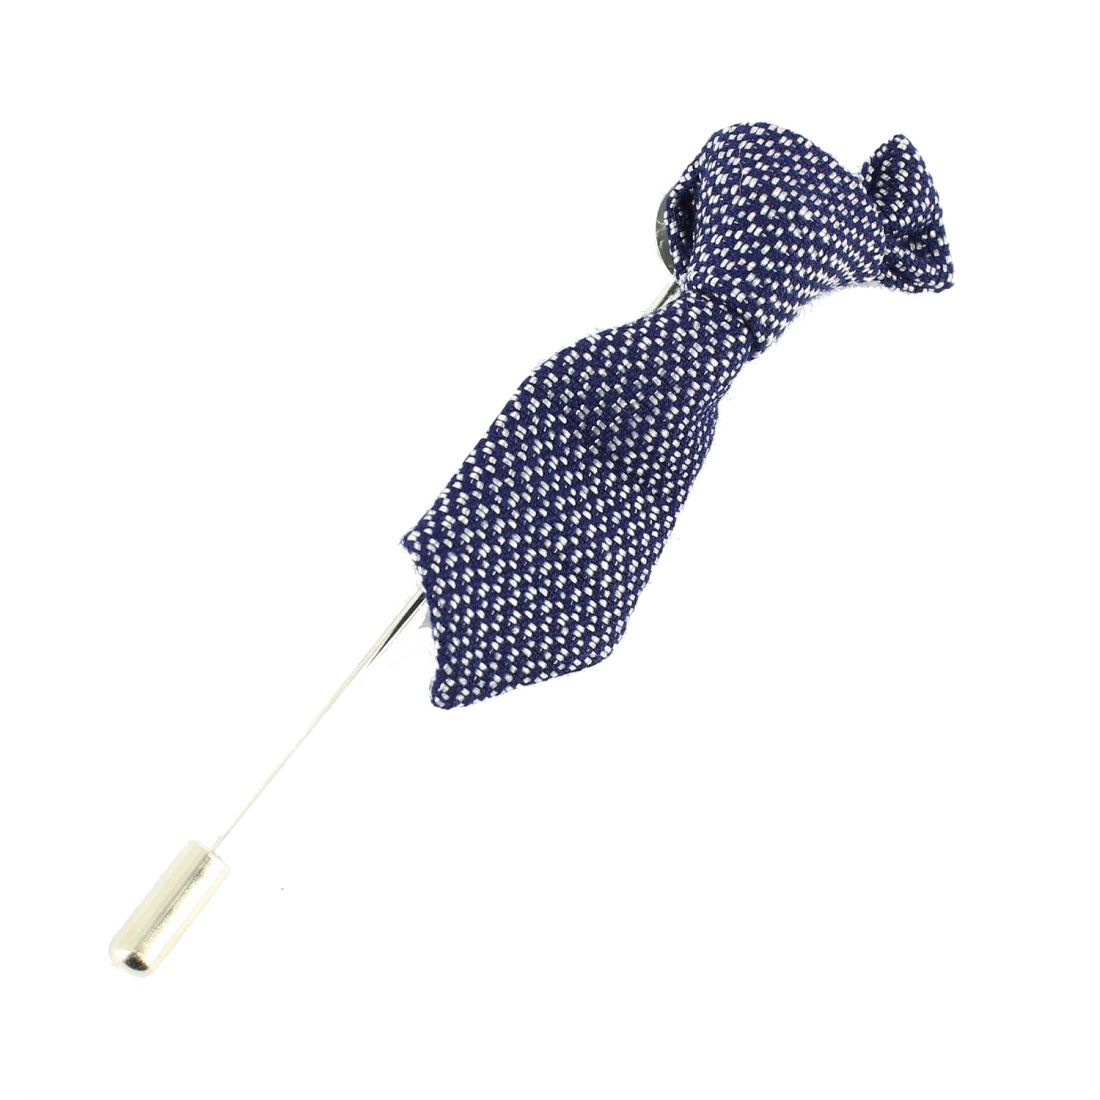 Boutonnière mini cravate style Bleu Cravate Avenue Signature